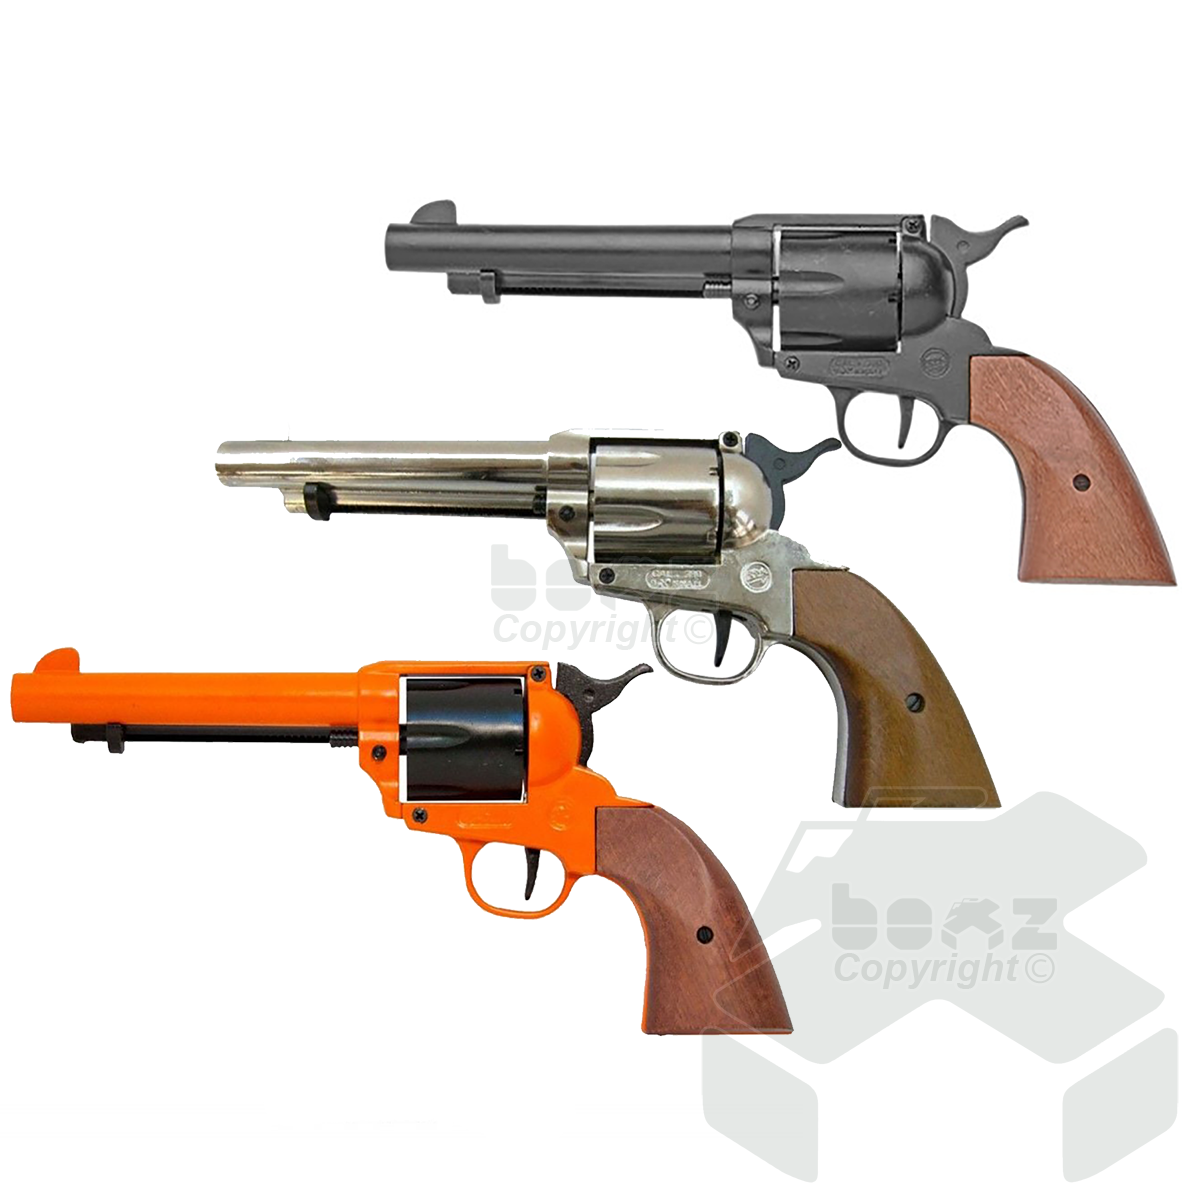 Bruni Single Action Blank Firing Revolvers - .380